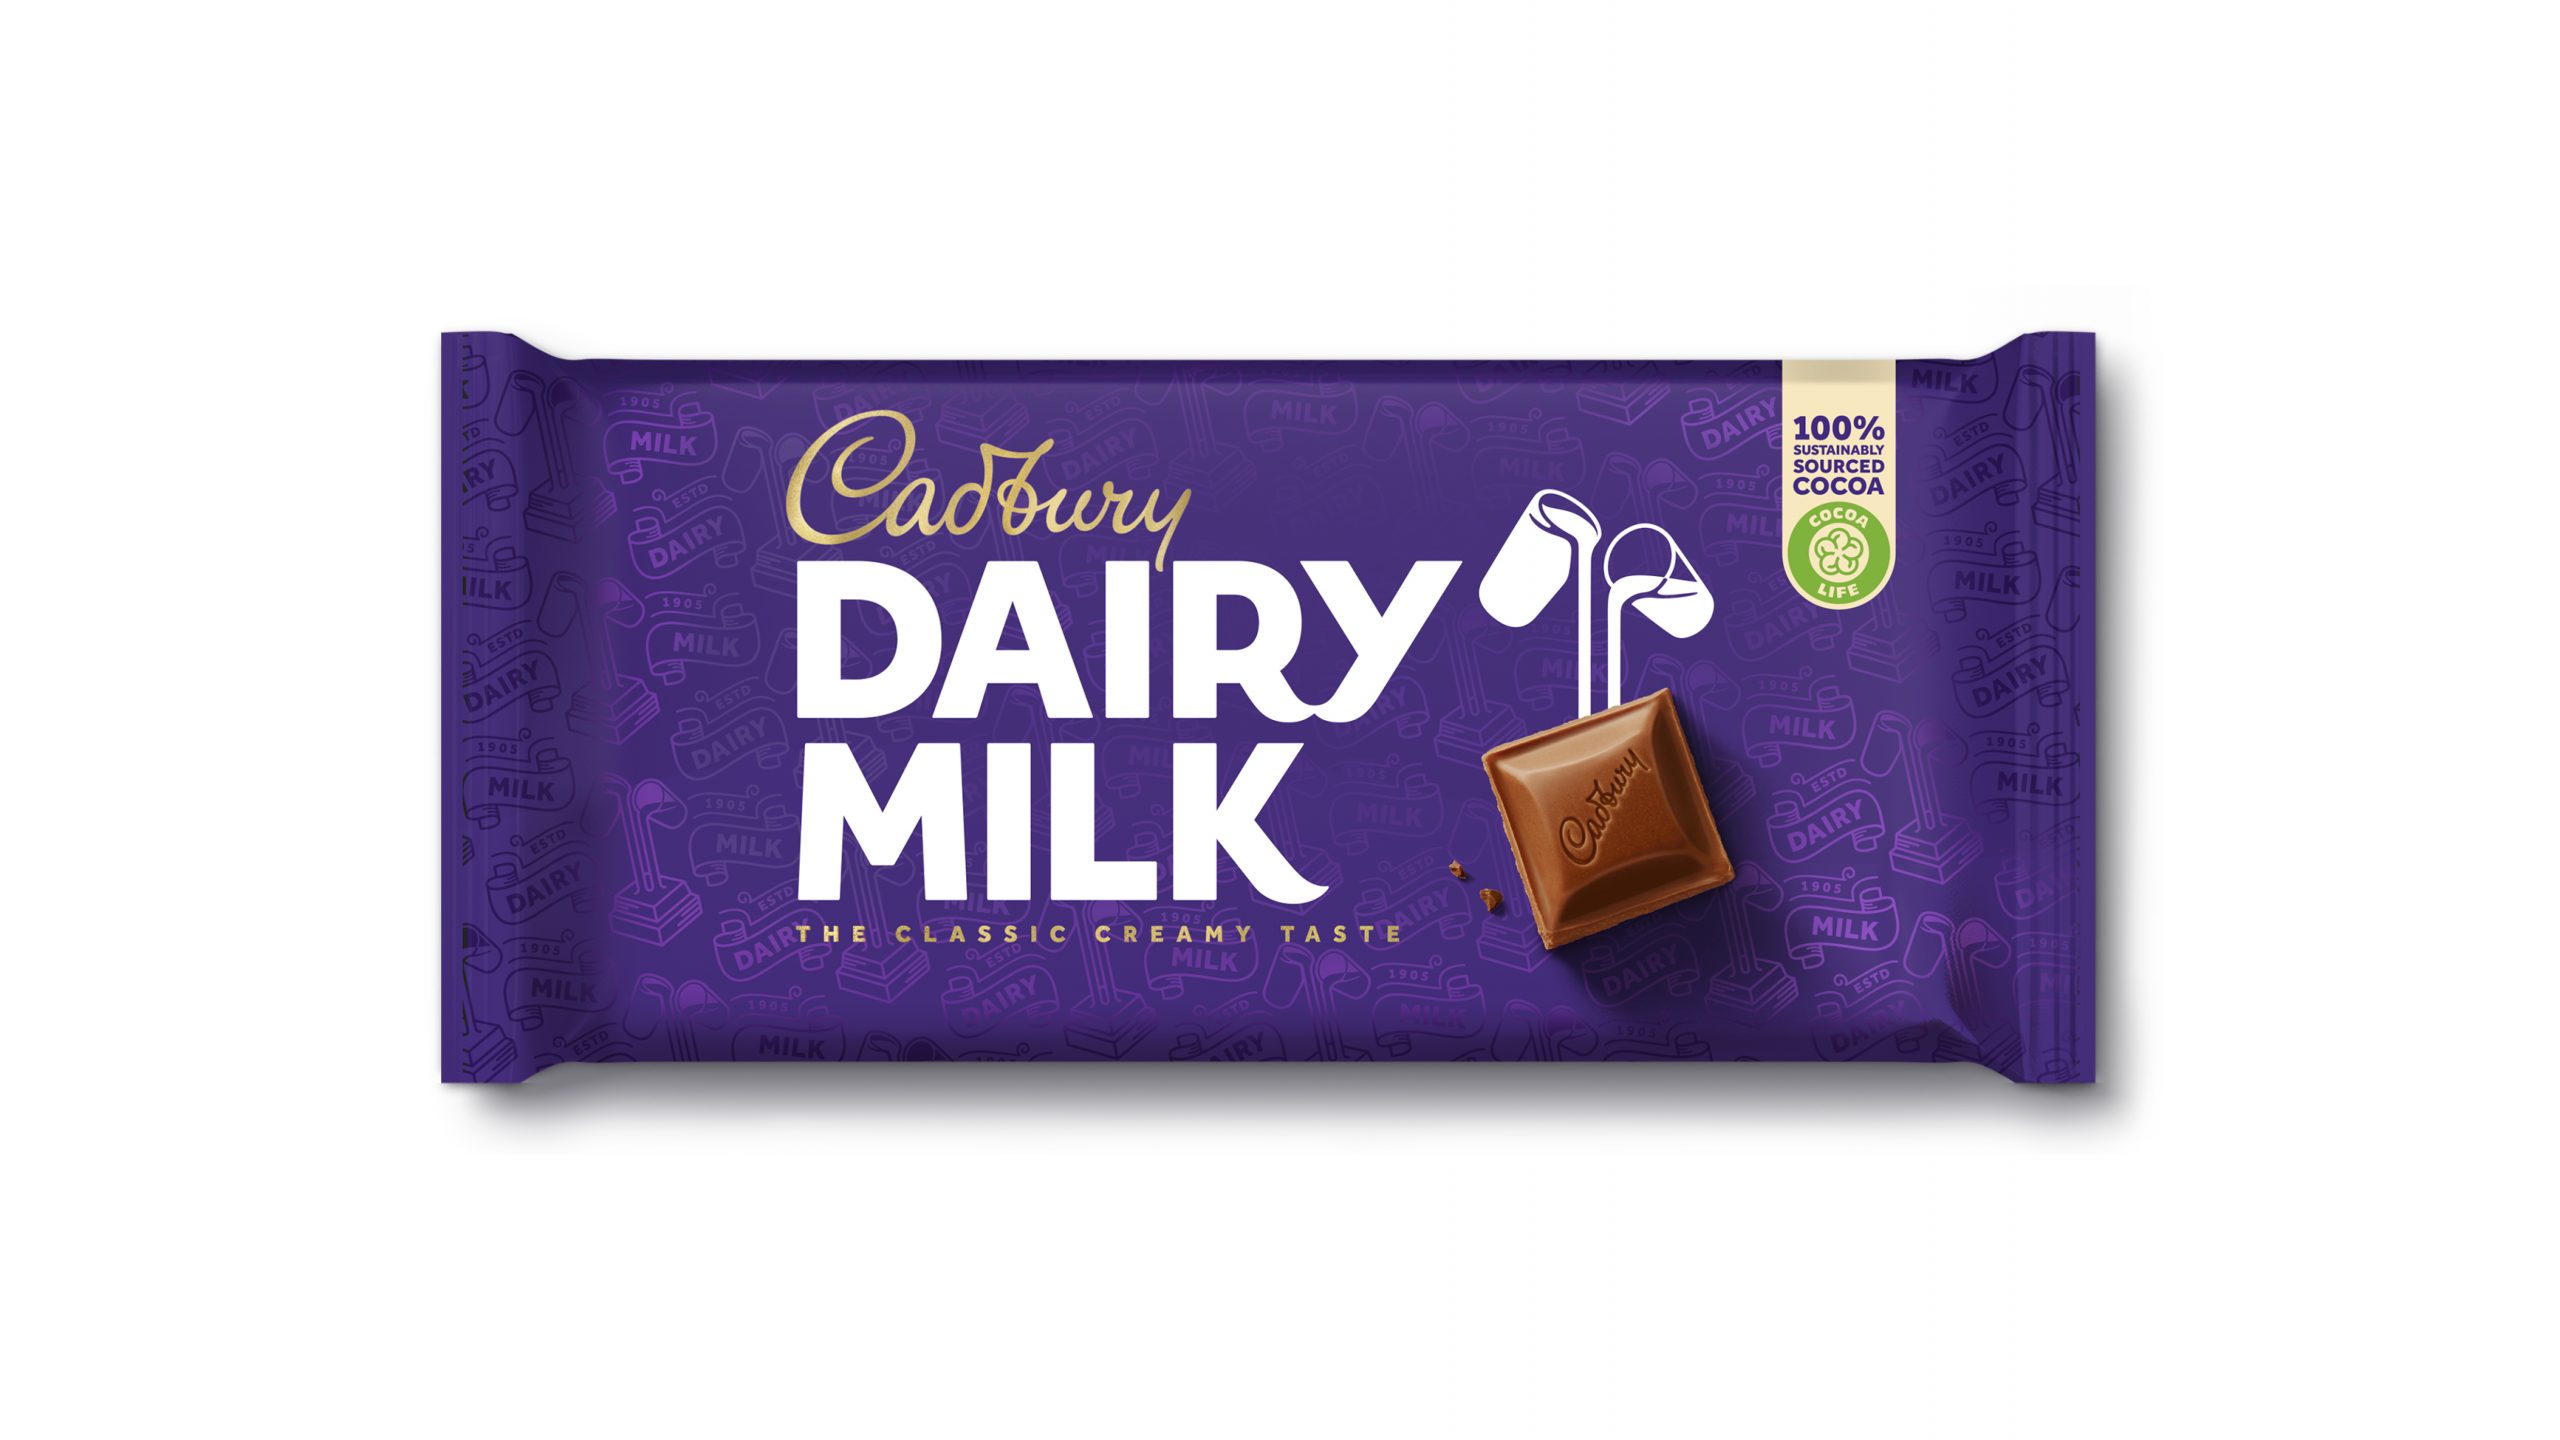 Cadbury Dairy Milk packs in UK set to include recycled plastic